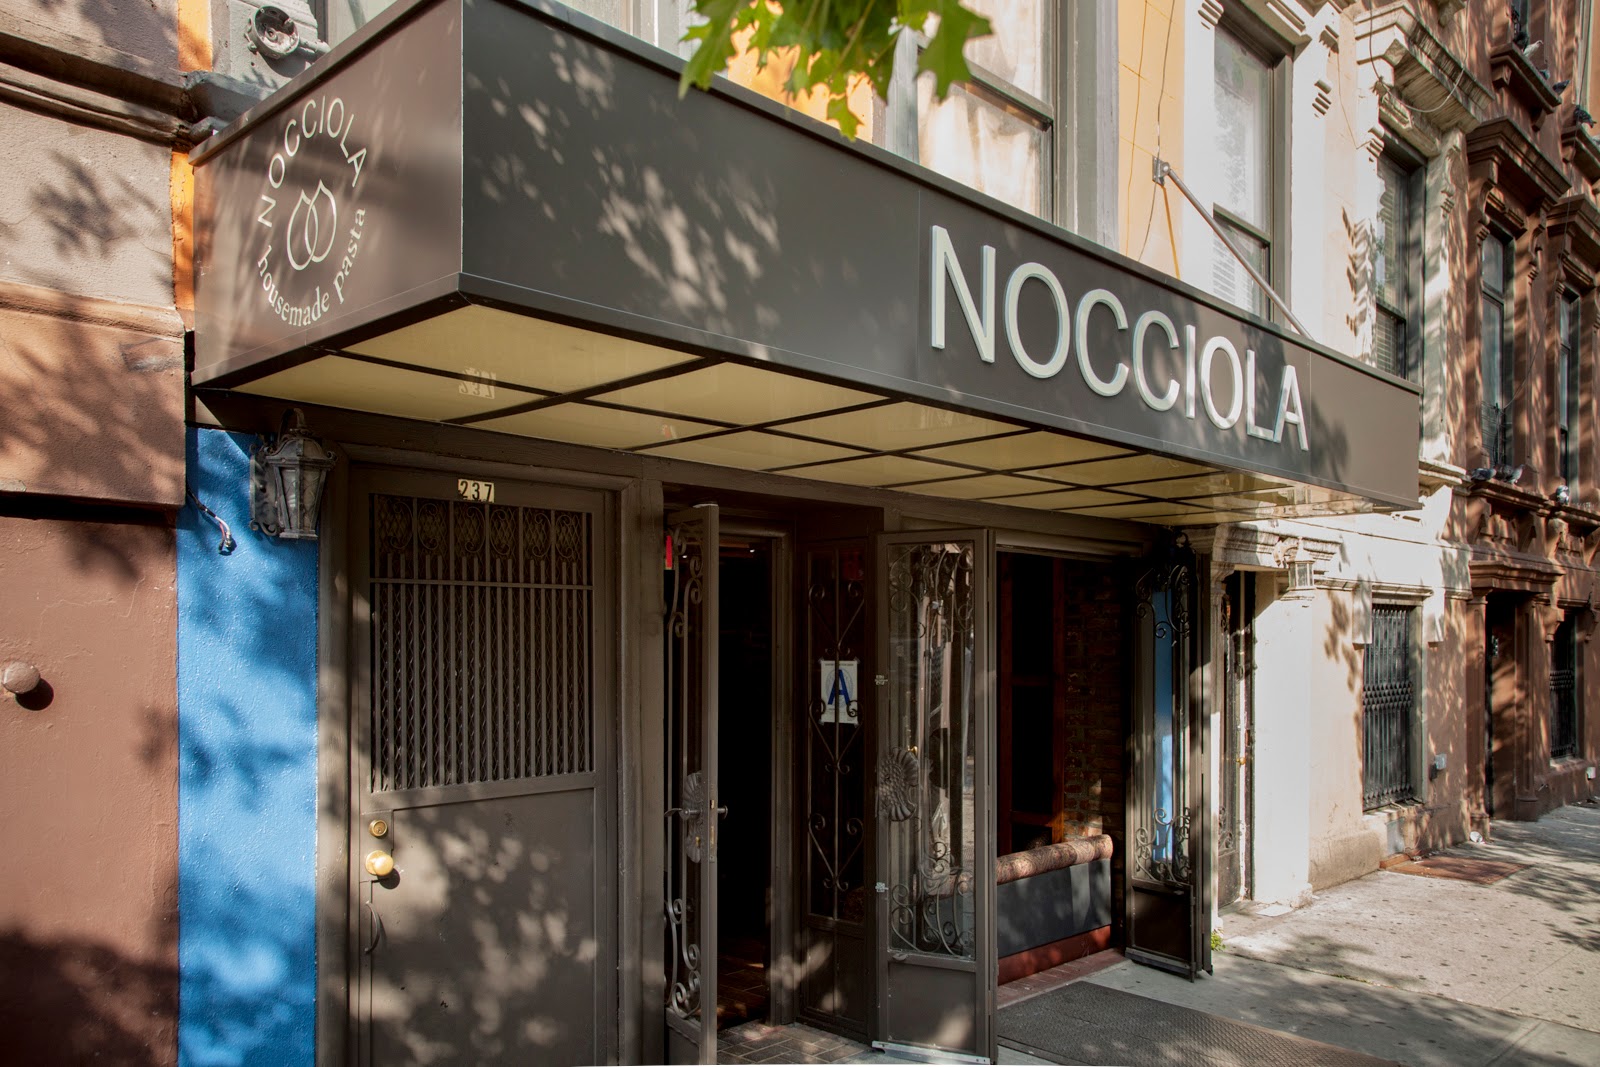 Photo of Nocciola Ristorante in New York City, New York, United States - 2 Picture of Restaurant, Food, Point of interest, Establishment